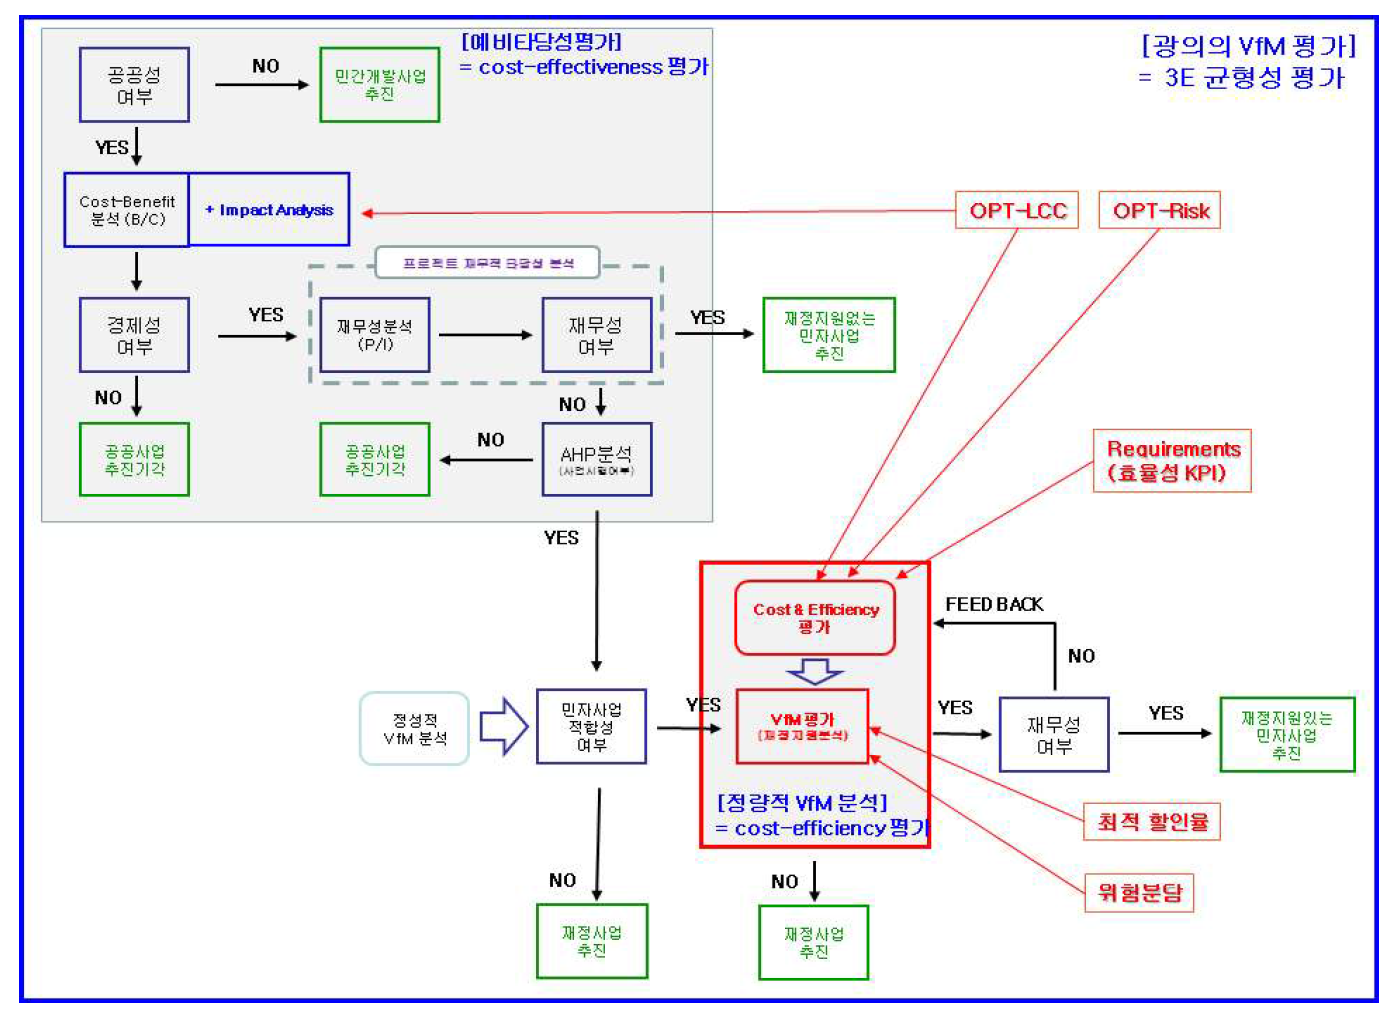 3E 균형 및 Cost-Efficiency에 포커싱된 KRRI-VfM 개념(ToBe 모델)